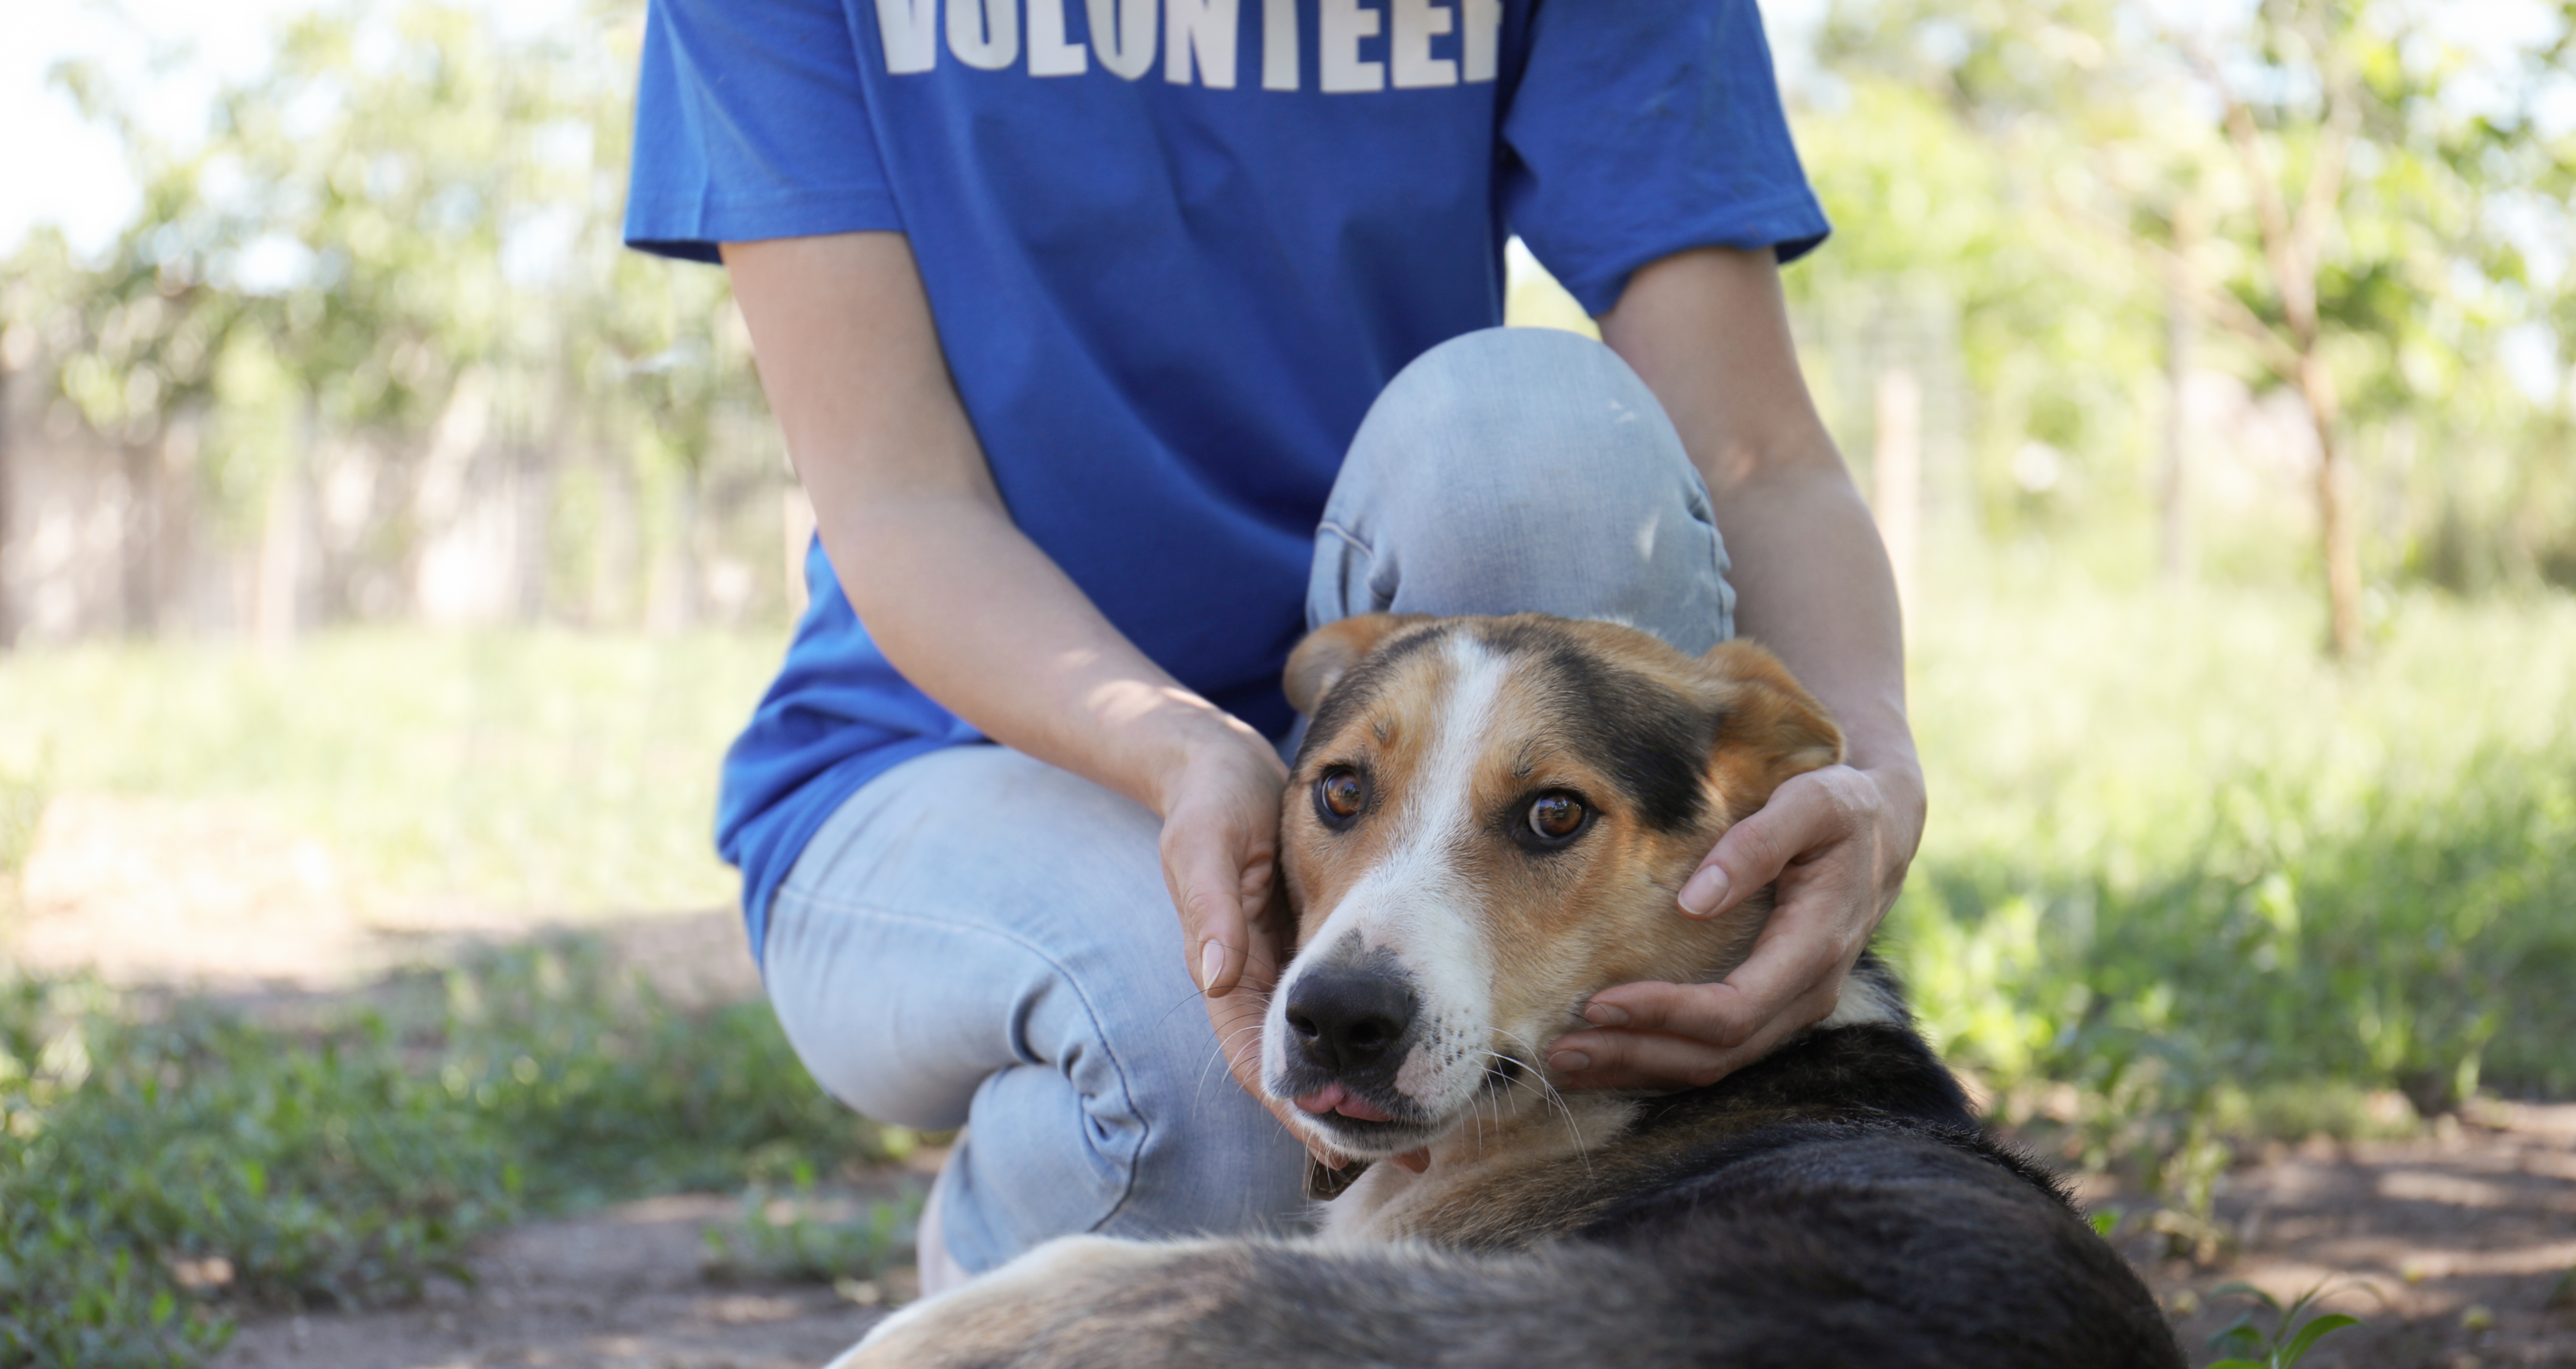 Pet shelter volunteer with dog